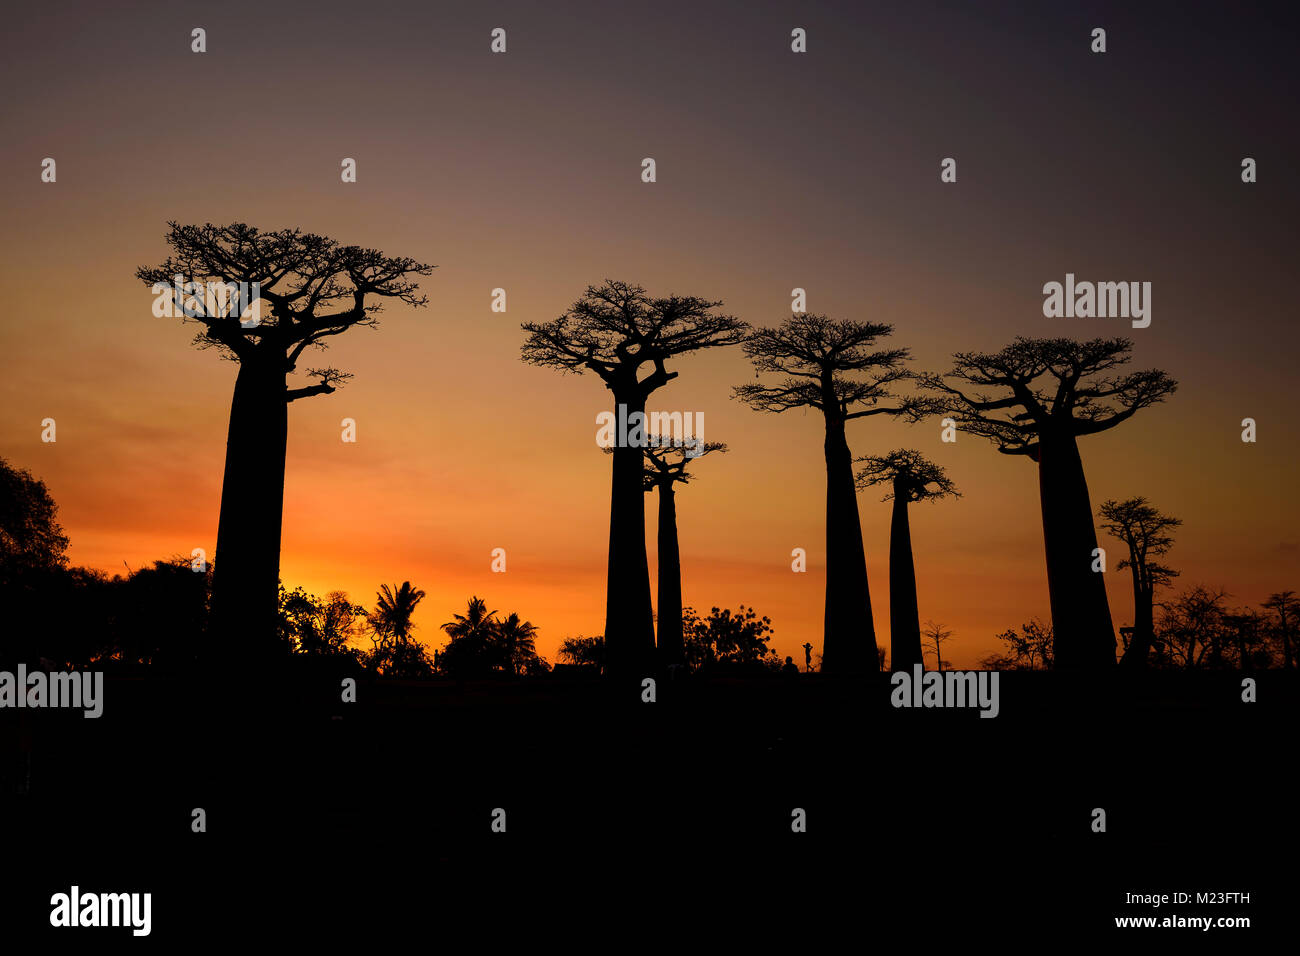 Baobab - Adansonia grandidieri, Madagaskar an der Westküste. Reisen Madagaskar. Urlaub. Iconic Baum. Stockfoto